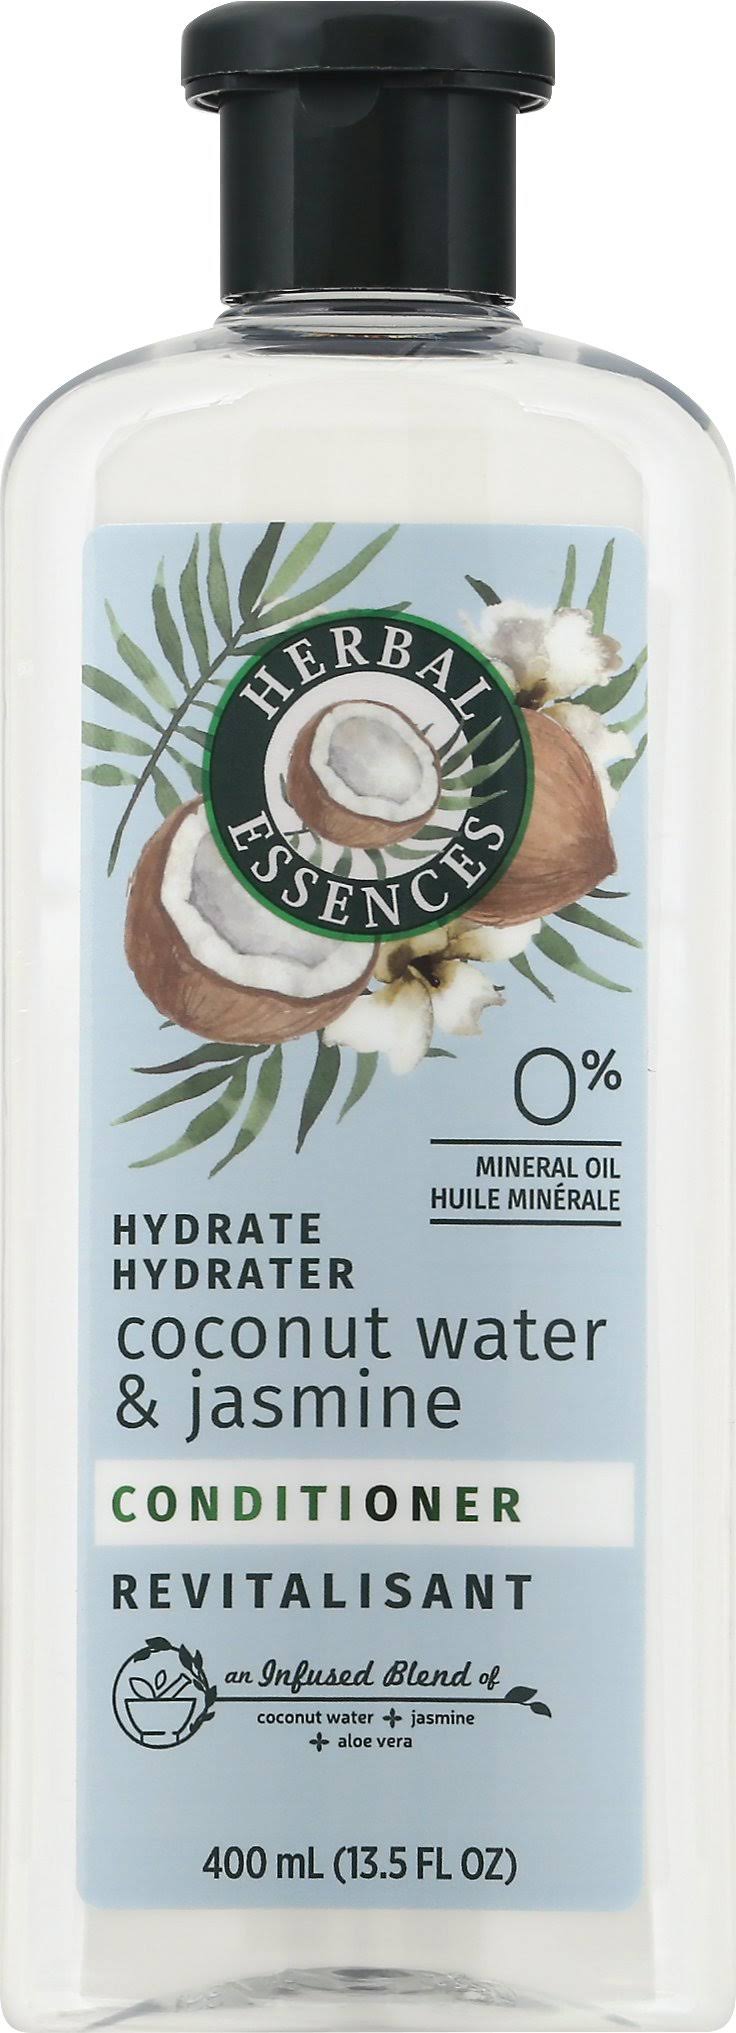 Herbal Essences Conditioner, Coconut Water & Jasmine, Hydrate - 400 ml